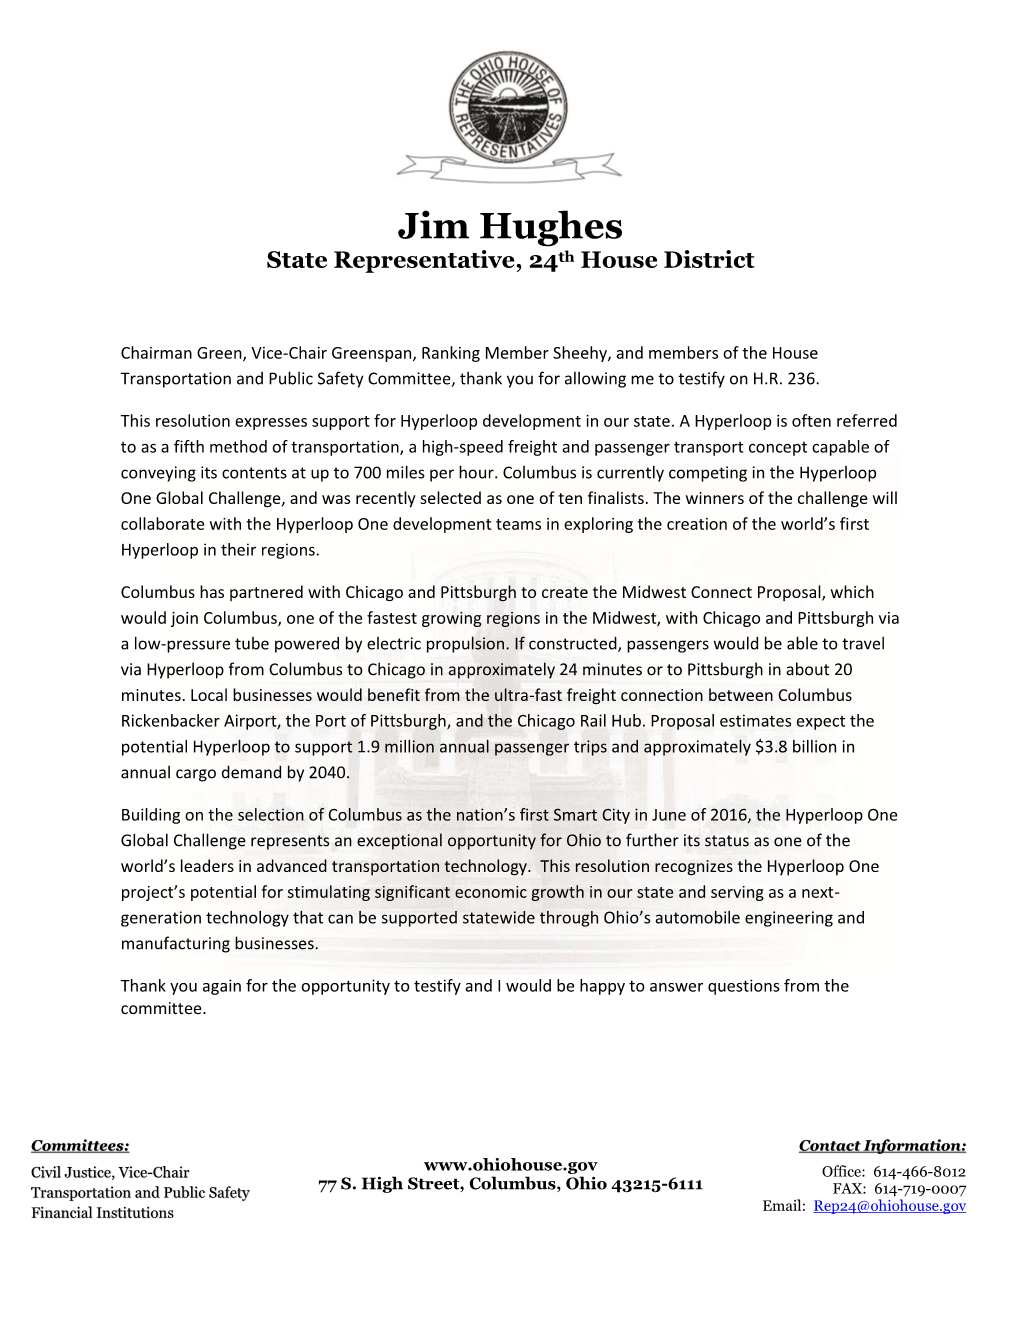 Jim Hughes State Representative, 24Th House District